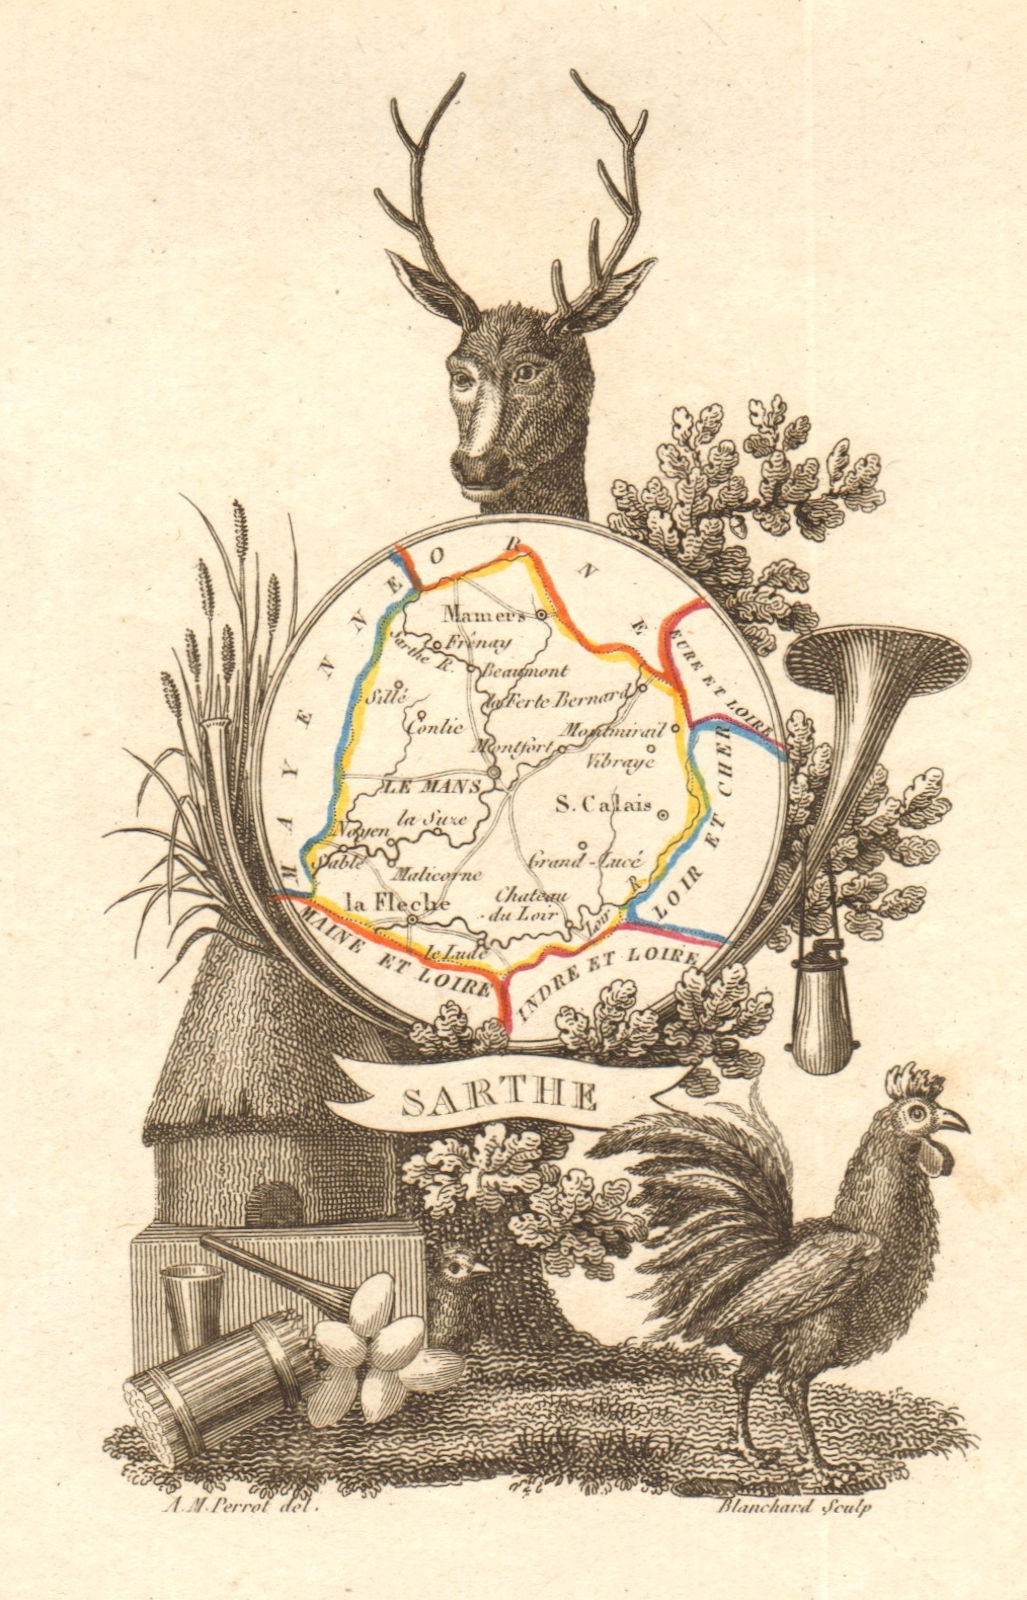 Associate Product SARTHE département. Scarce antique map/carte by A.M. PERROT 1823 old